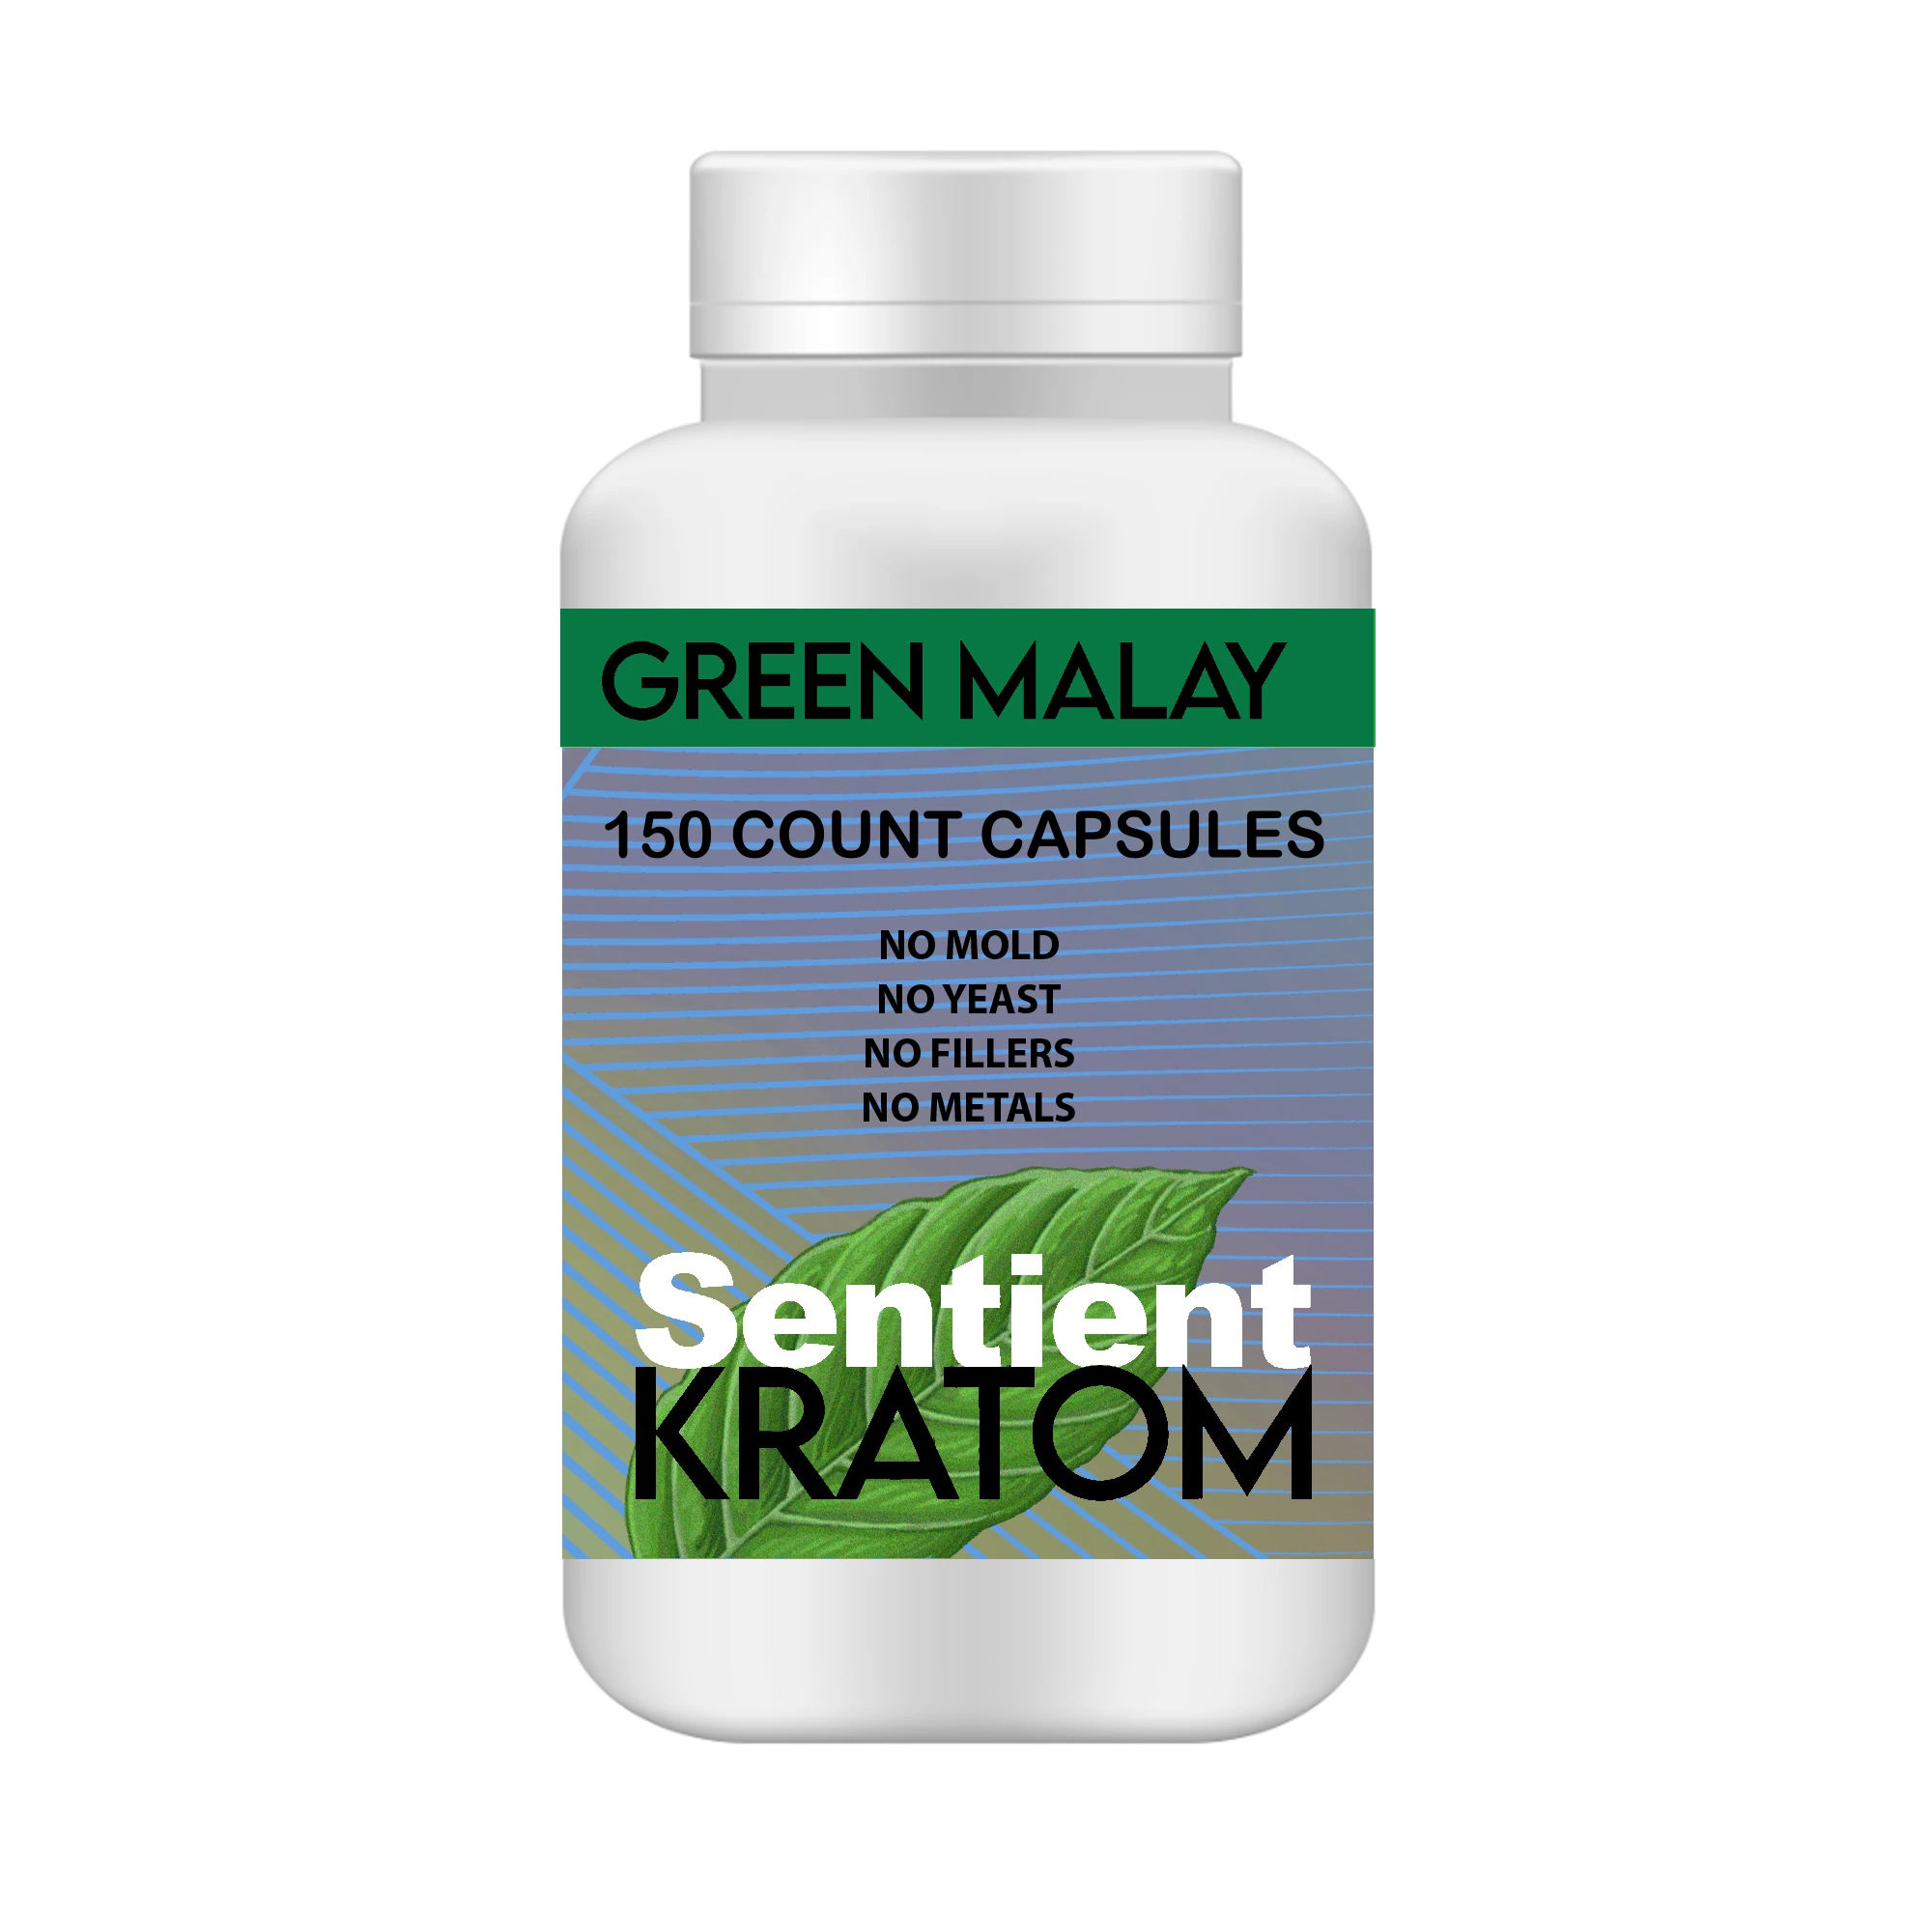 Green Malay Kratom 150ct